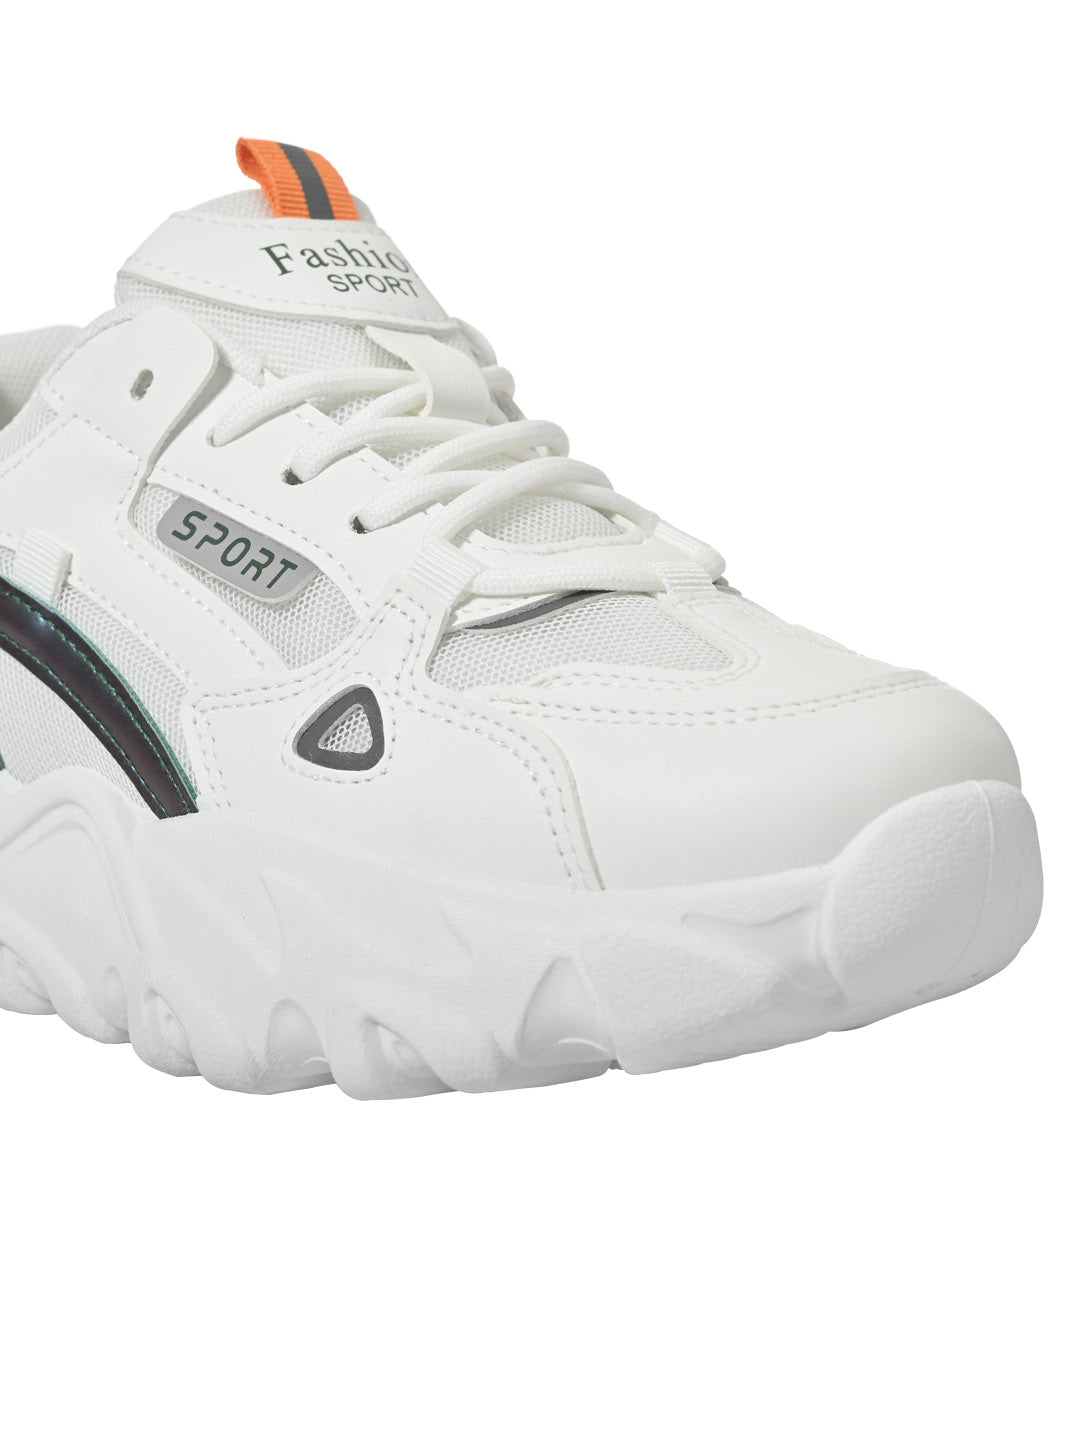 Women WHITE ORANGE SOLID Casual Sneaker